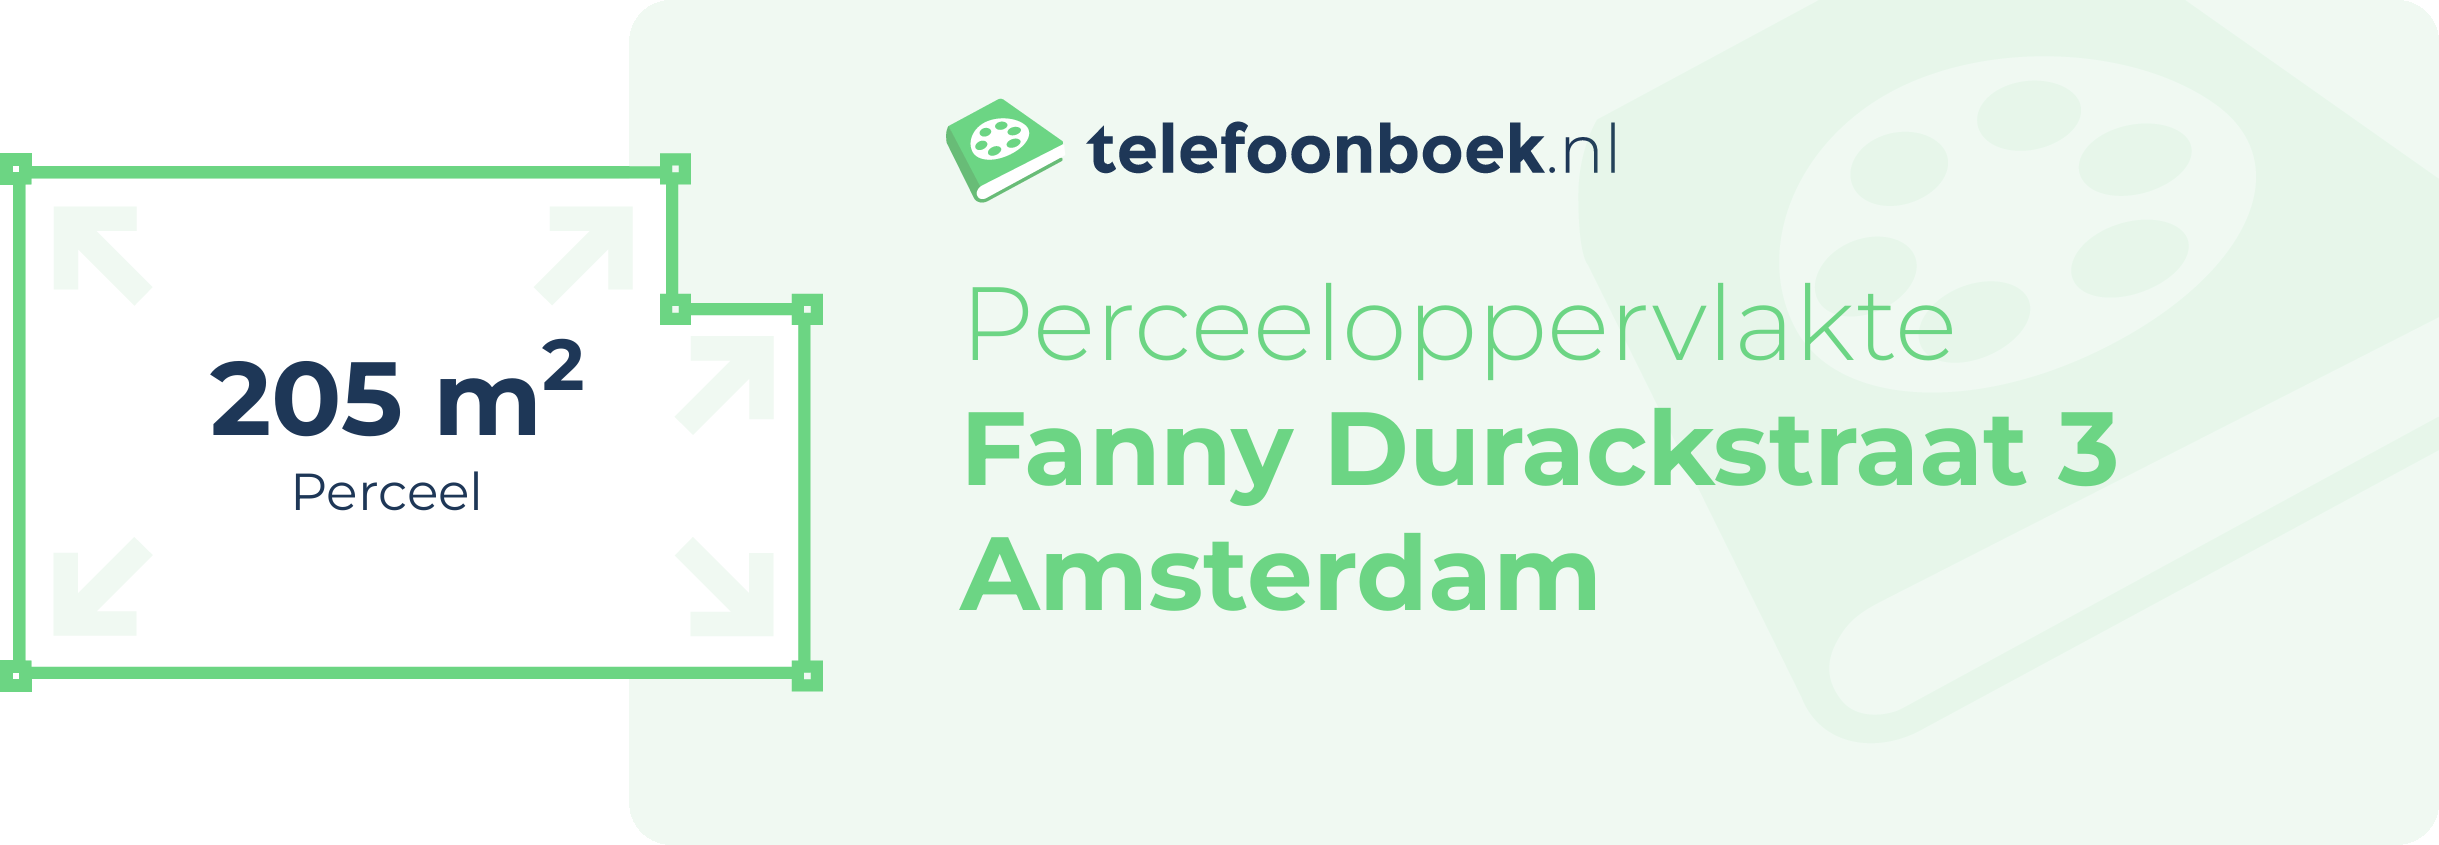 Perceeloppervlakte Fanny Durackstraat 3 Amsterdam